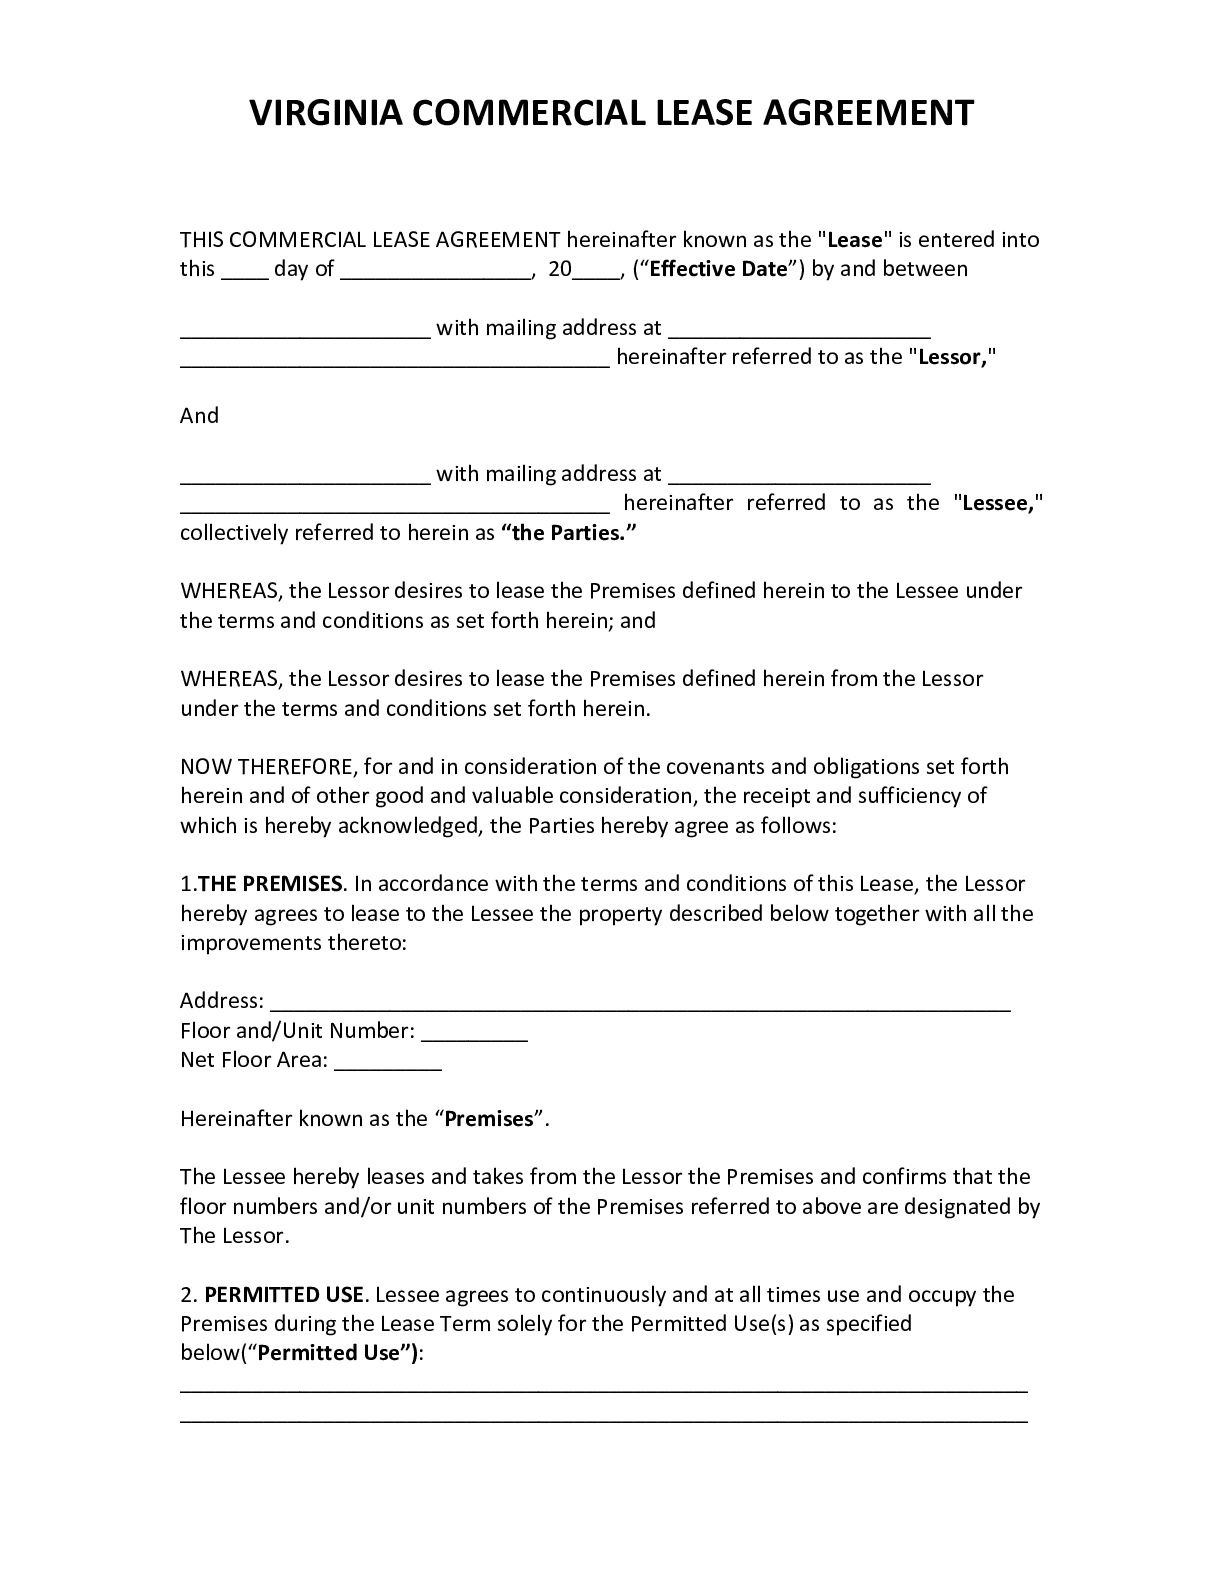 virginia-rental-lease-agreement-template-2023-pdf-doc